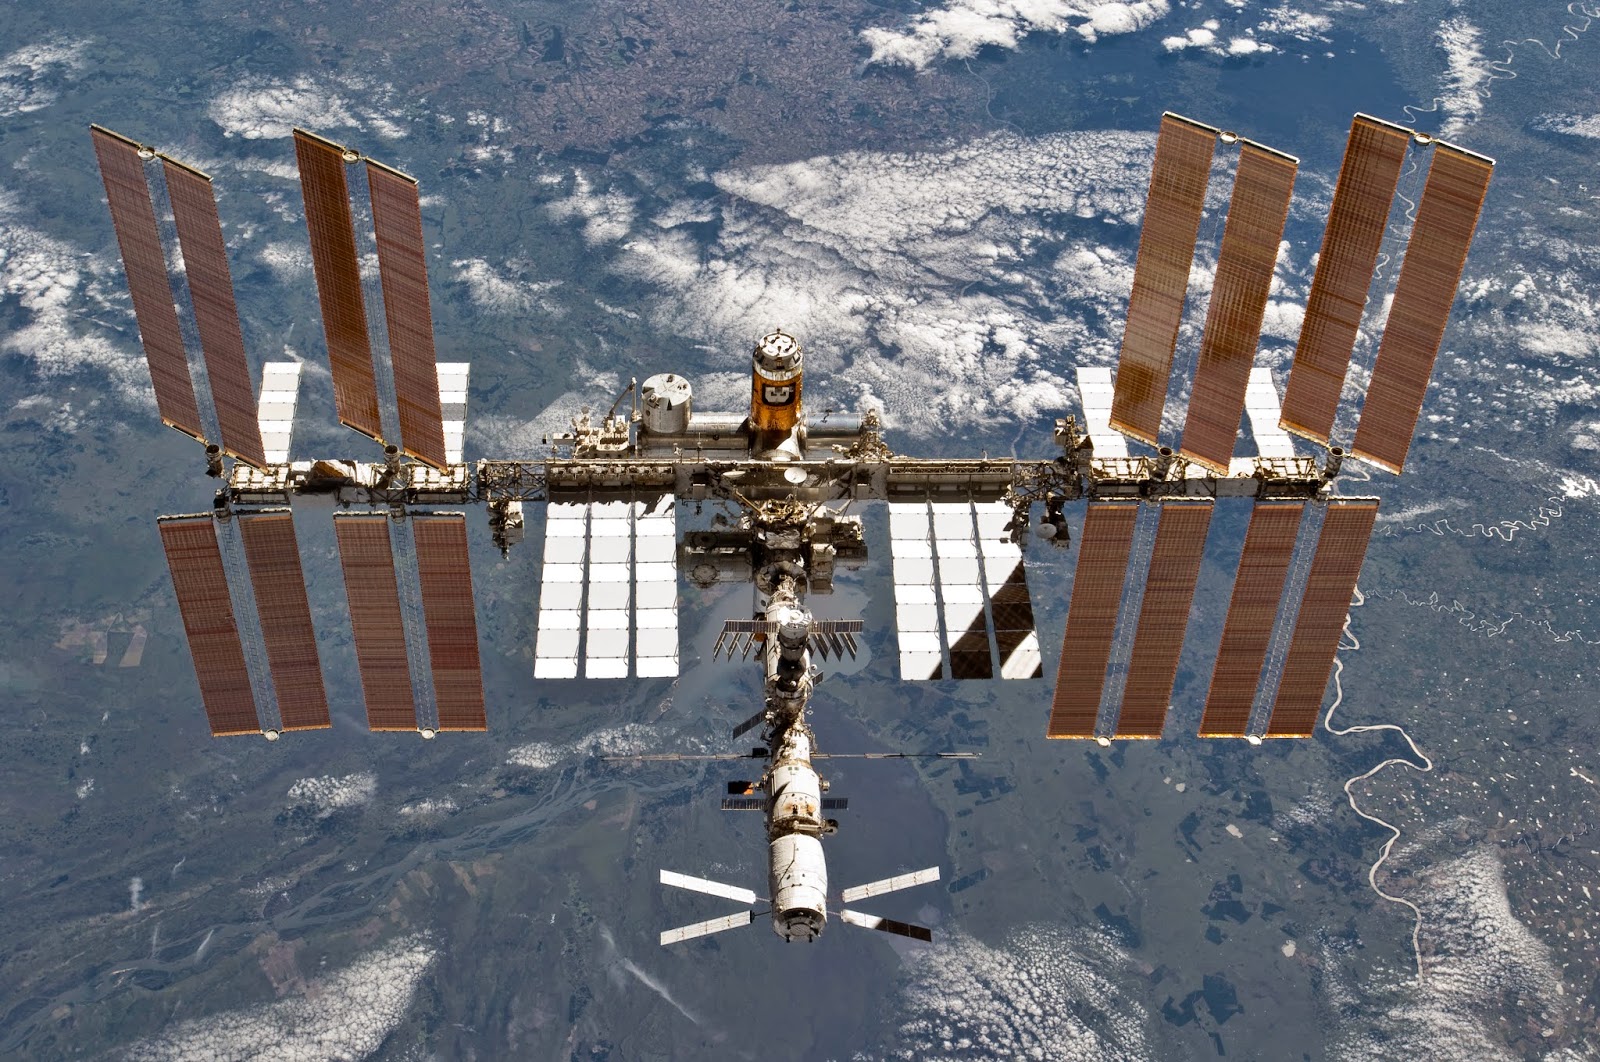 http://4.bp.blogspot.com/-3maFkDjxfIw/VBLWDFFnUkI/AAAAAAAAbjs/DOnFtDtNv0s/s1600/STS-133_International_Space_Station_after_undocking_5.jpg